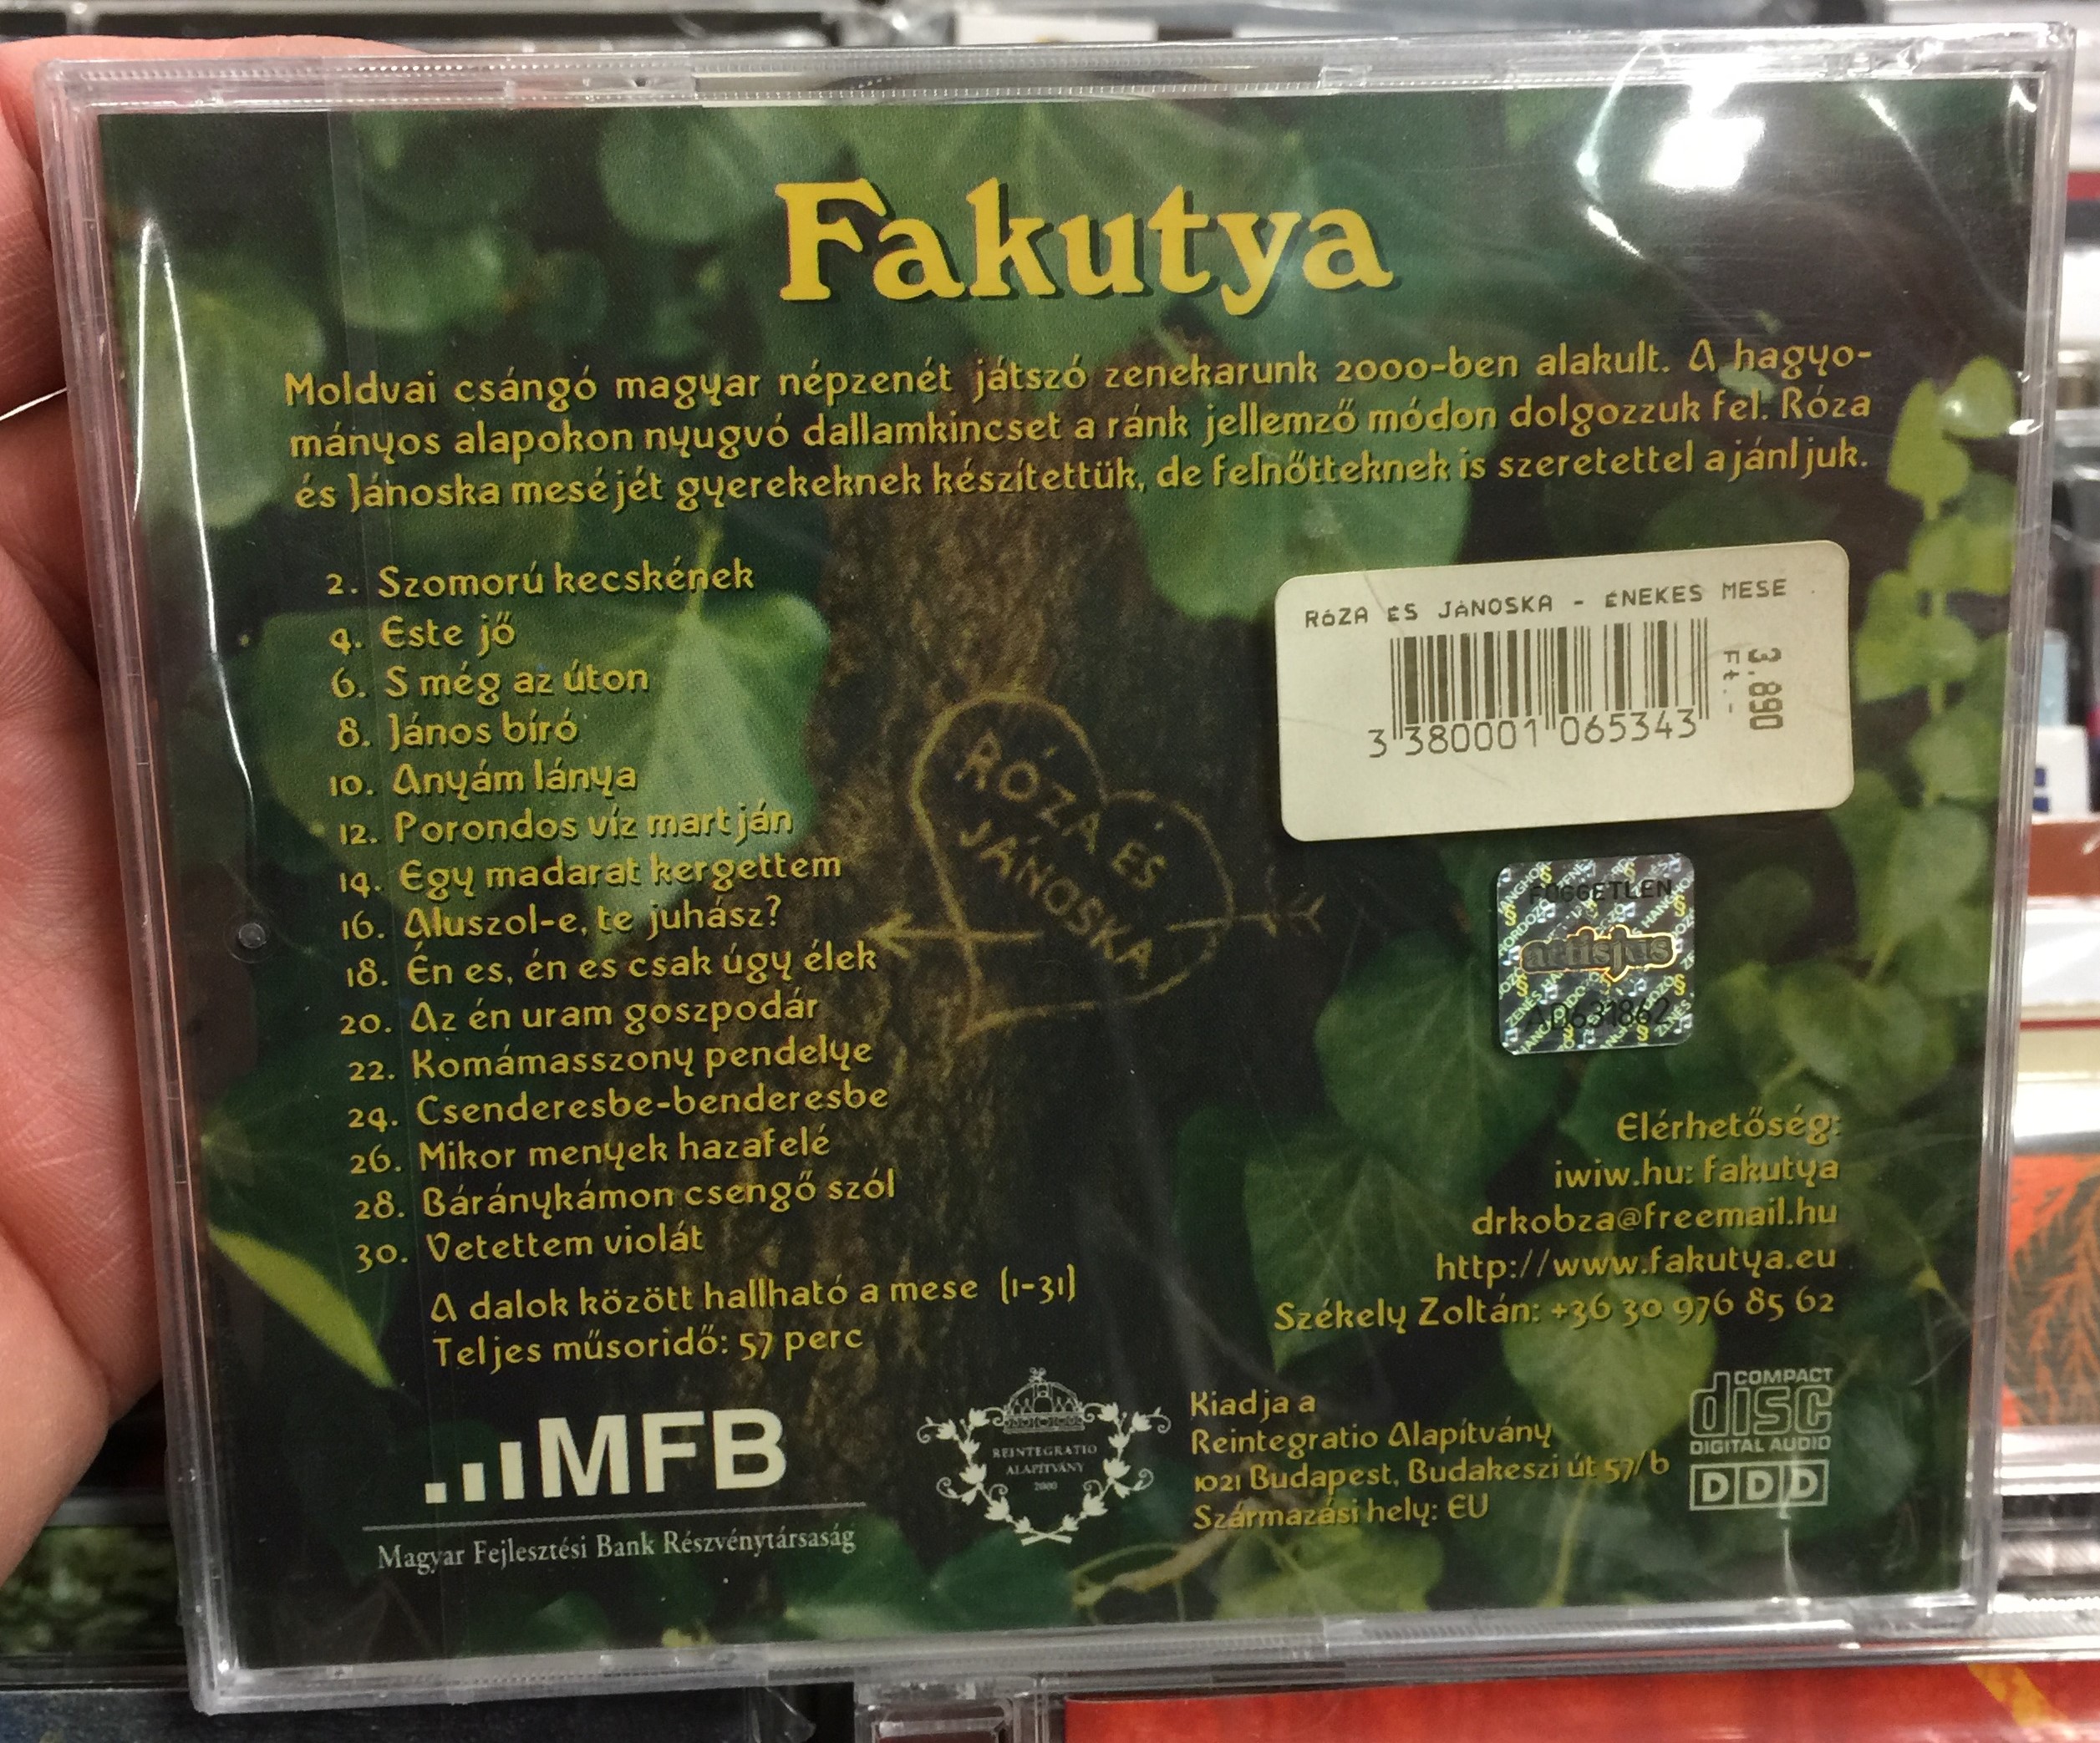 fakutya-r-za-s-j-noska-nekes-mese-reintegratio-alap-tv-ny-audio-cd-2007-r-j-cd02-2-.jpg